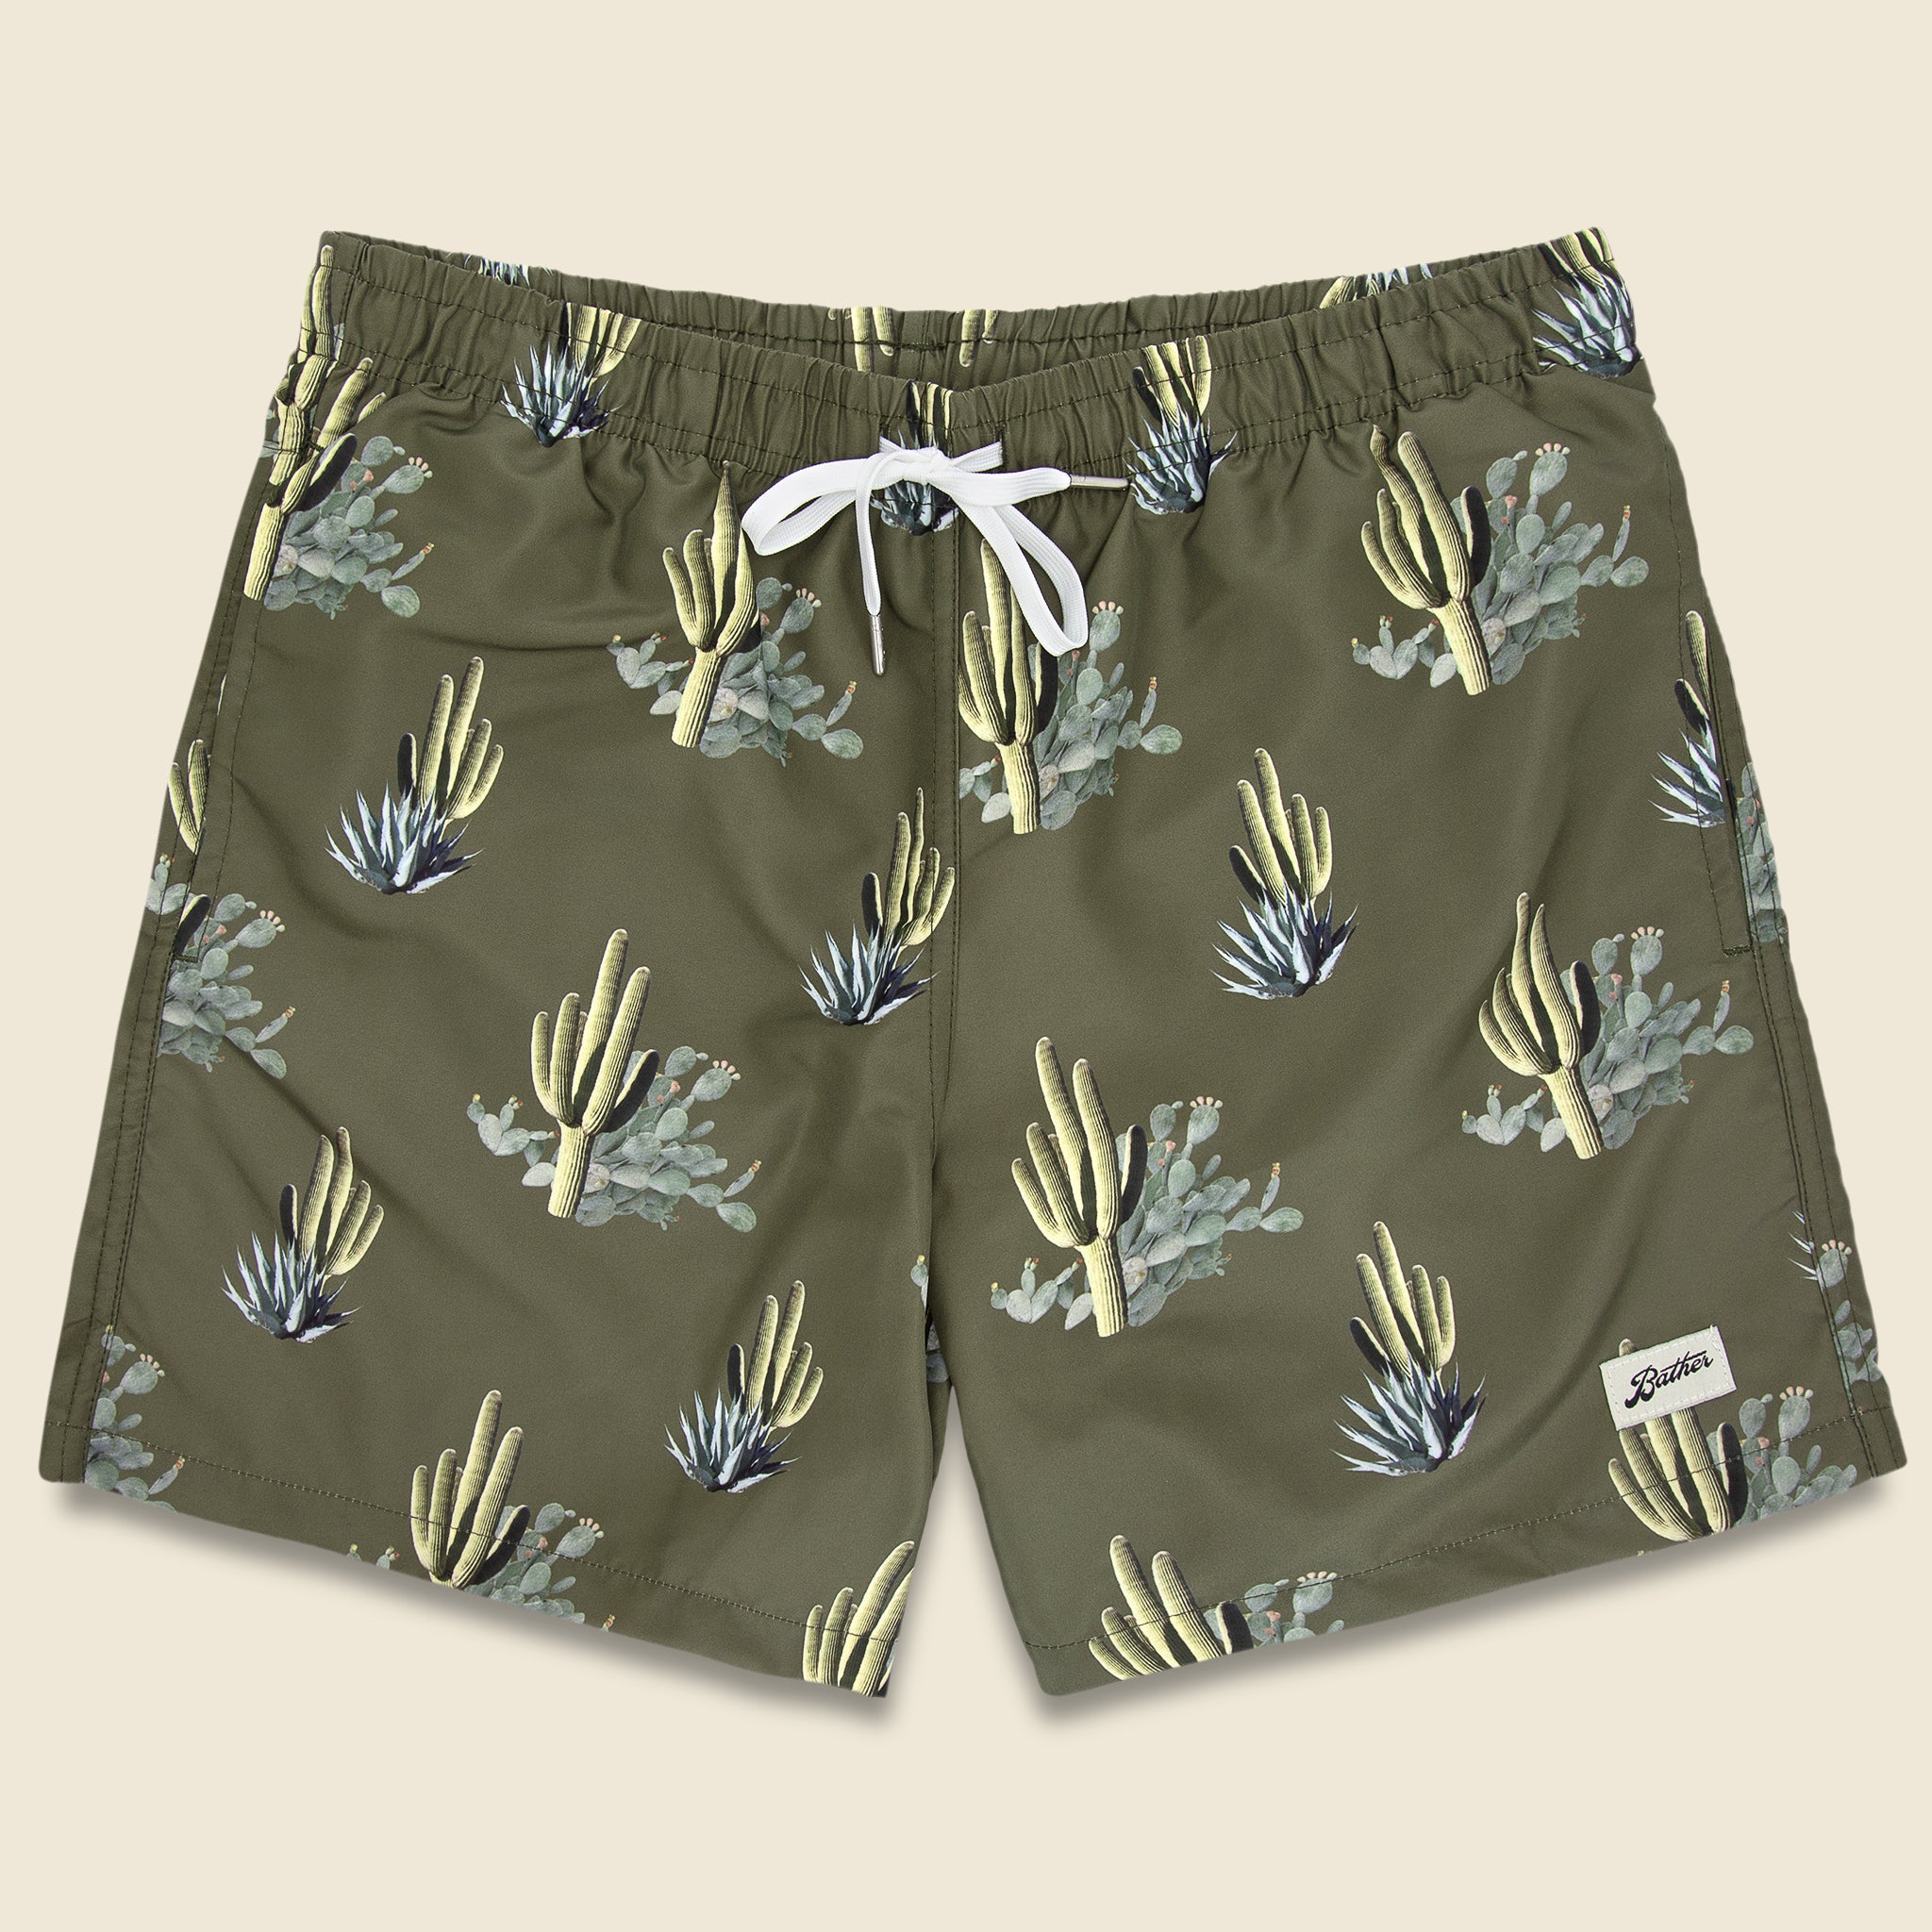 Cactus Print Swim Trunk - Dark Green - Bather - STAG Provisions - Shorts - Swim